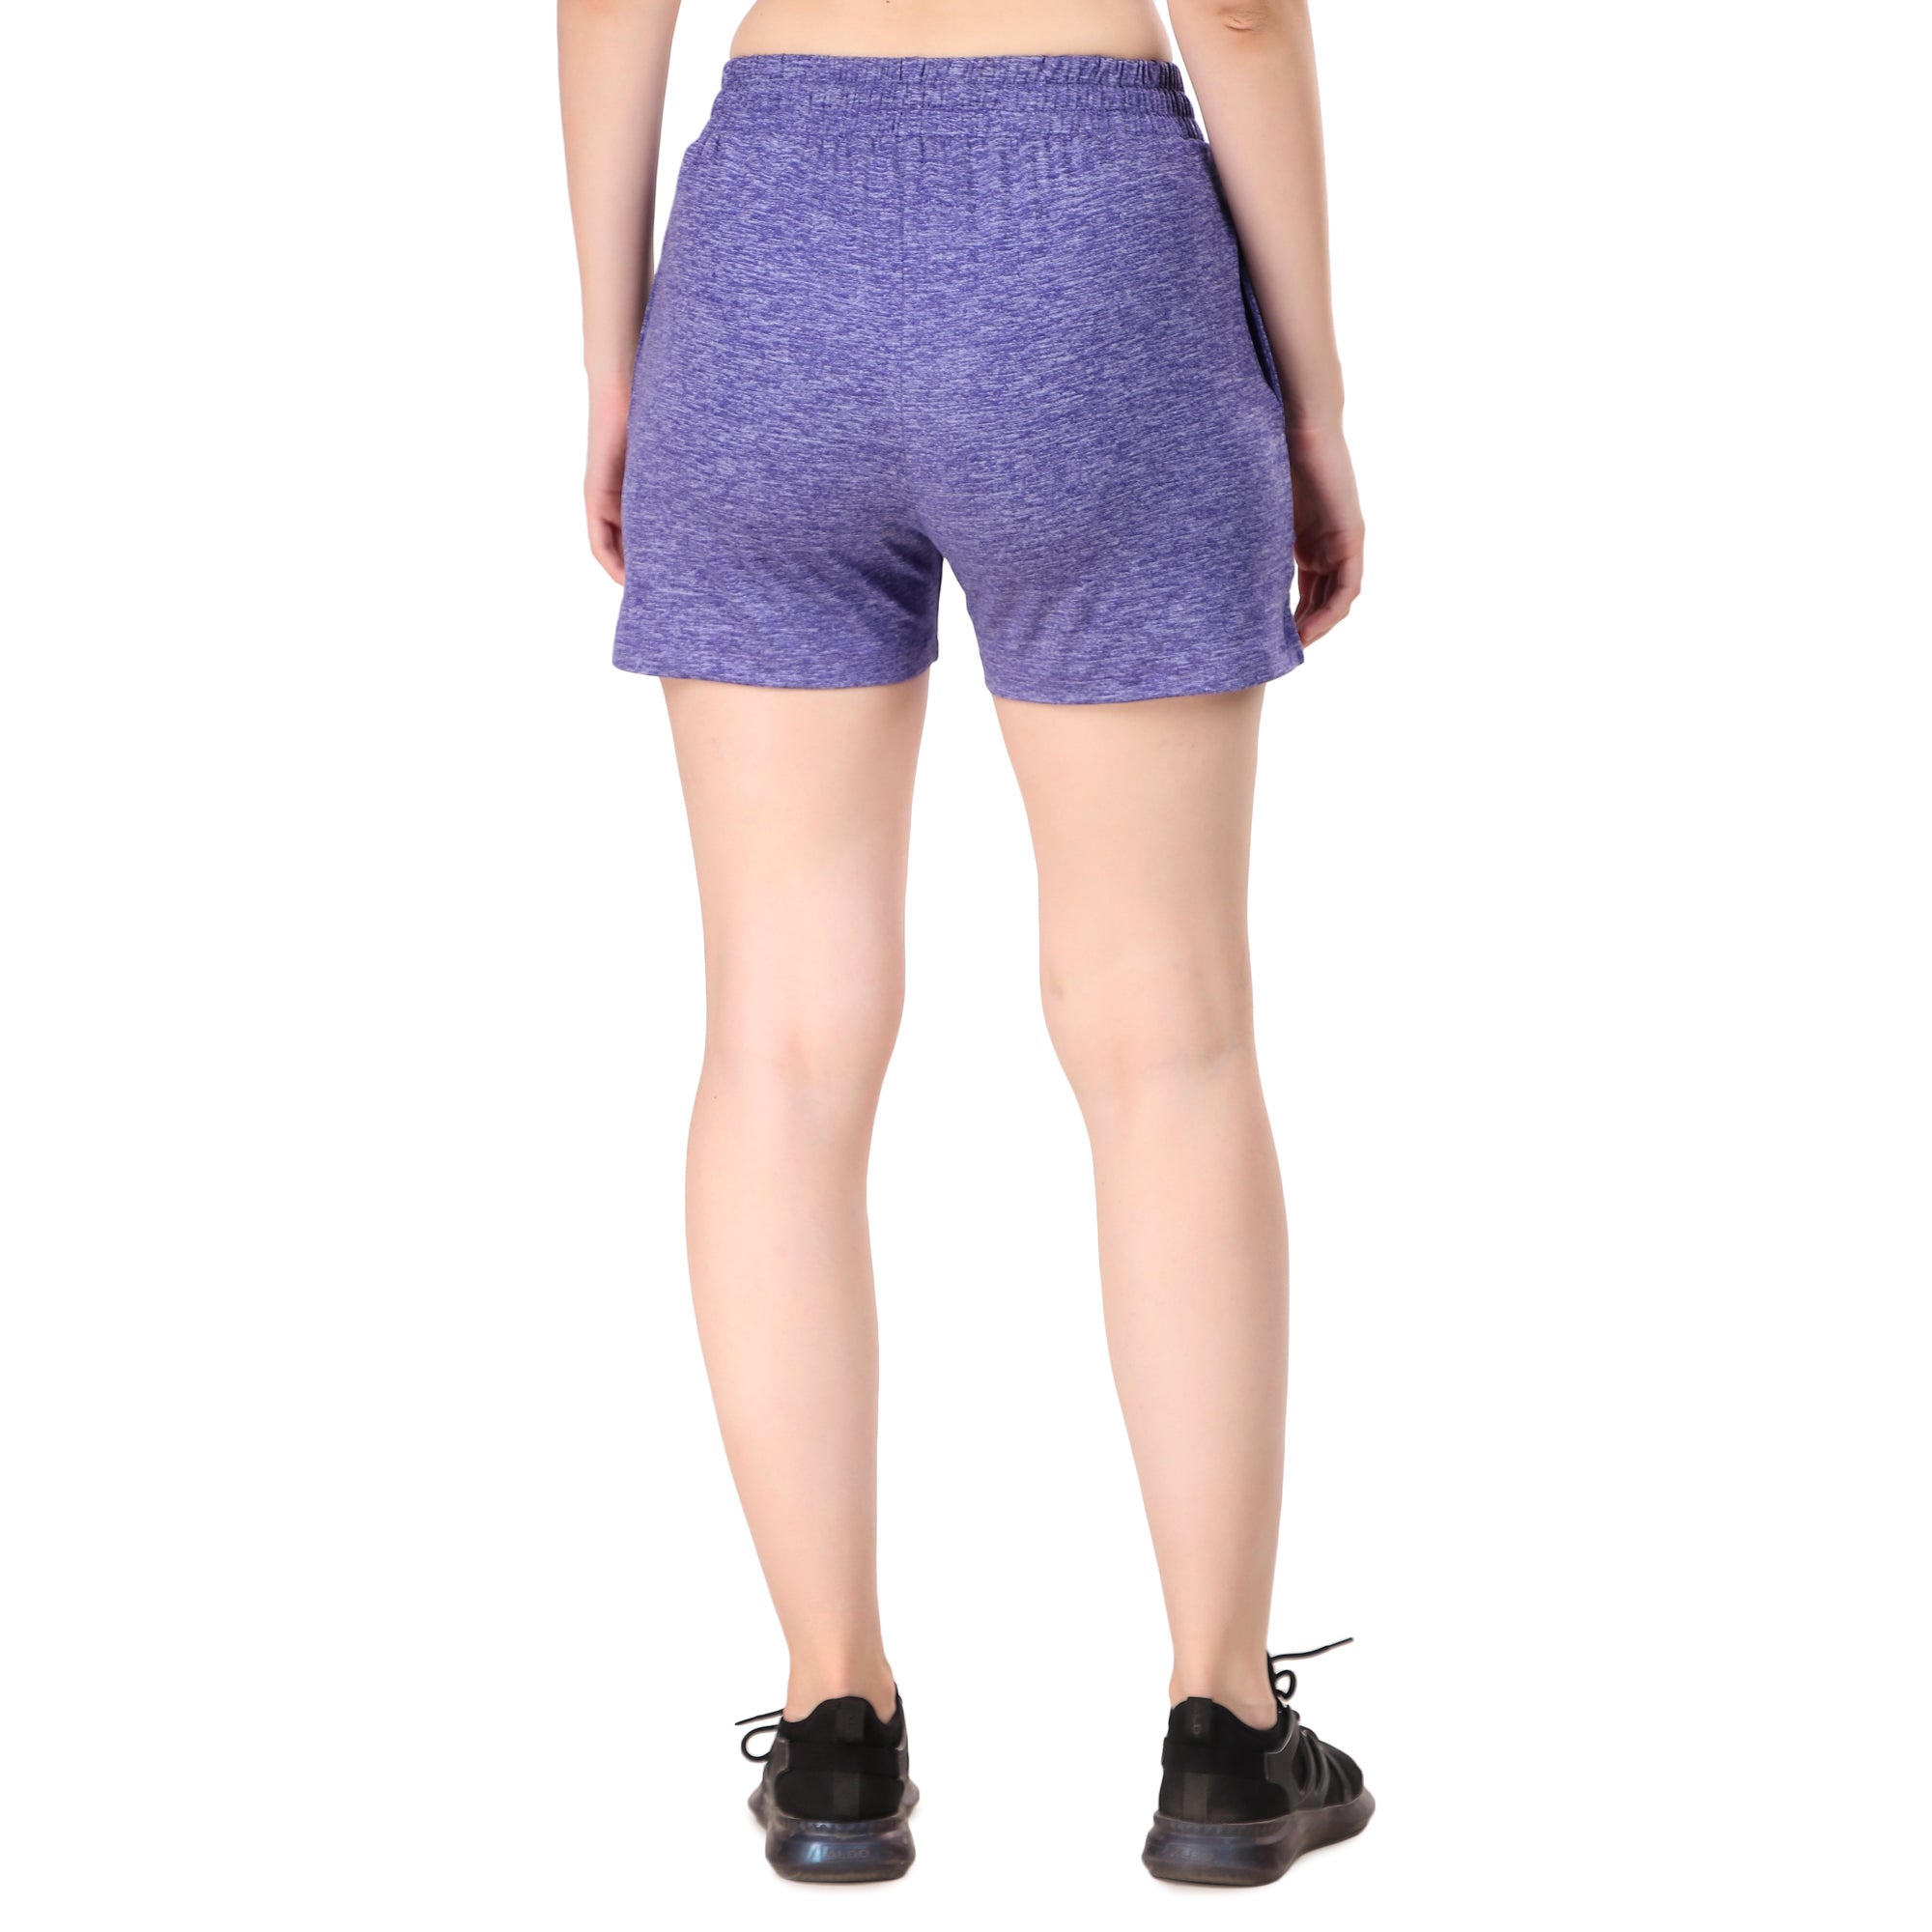 Activewear Shorts For Women (Purple Heather)